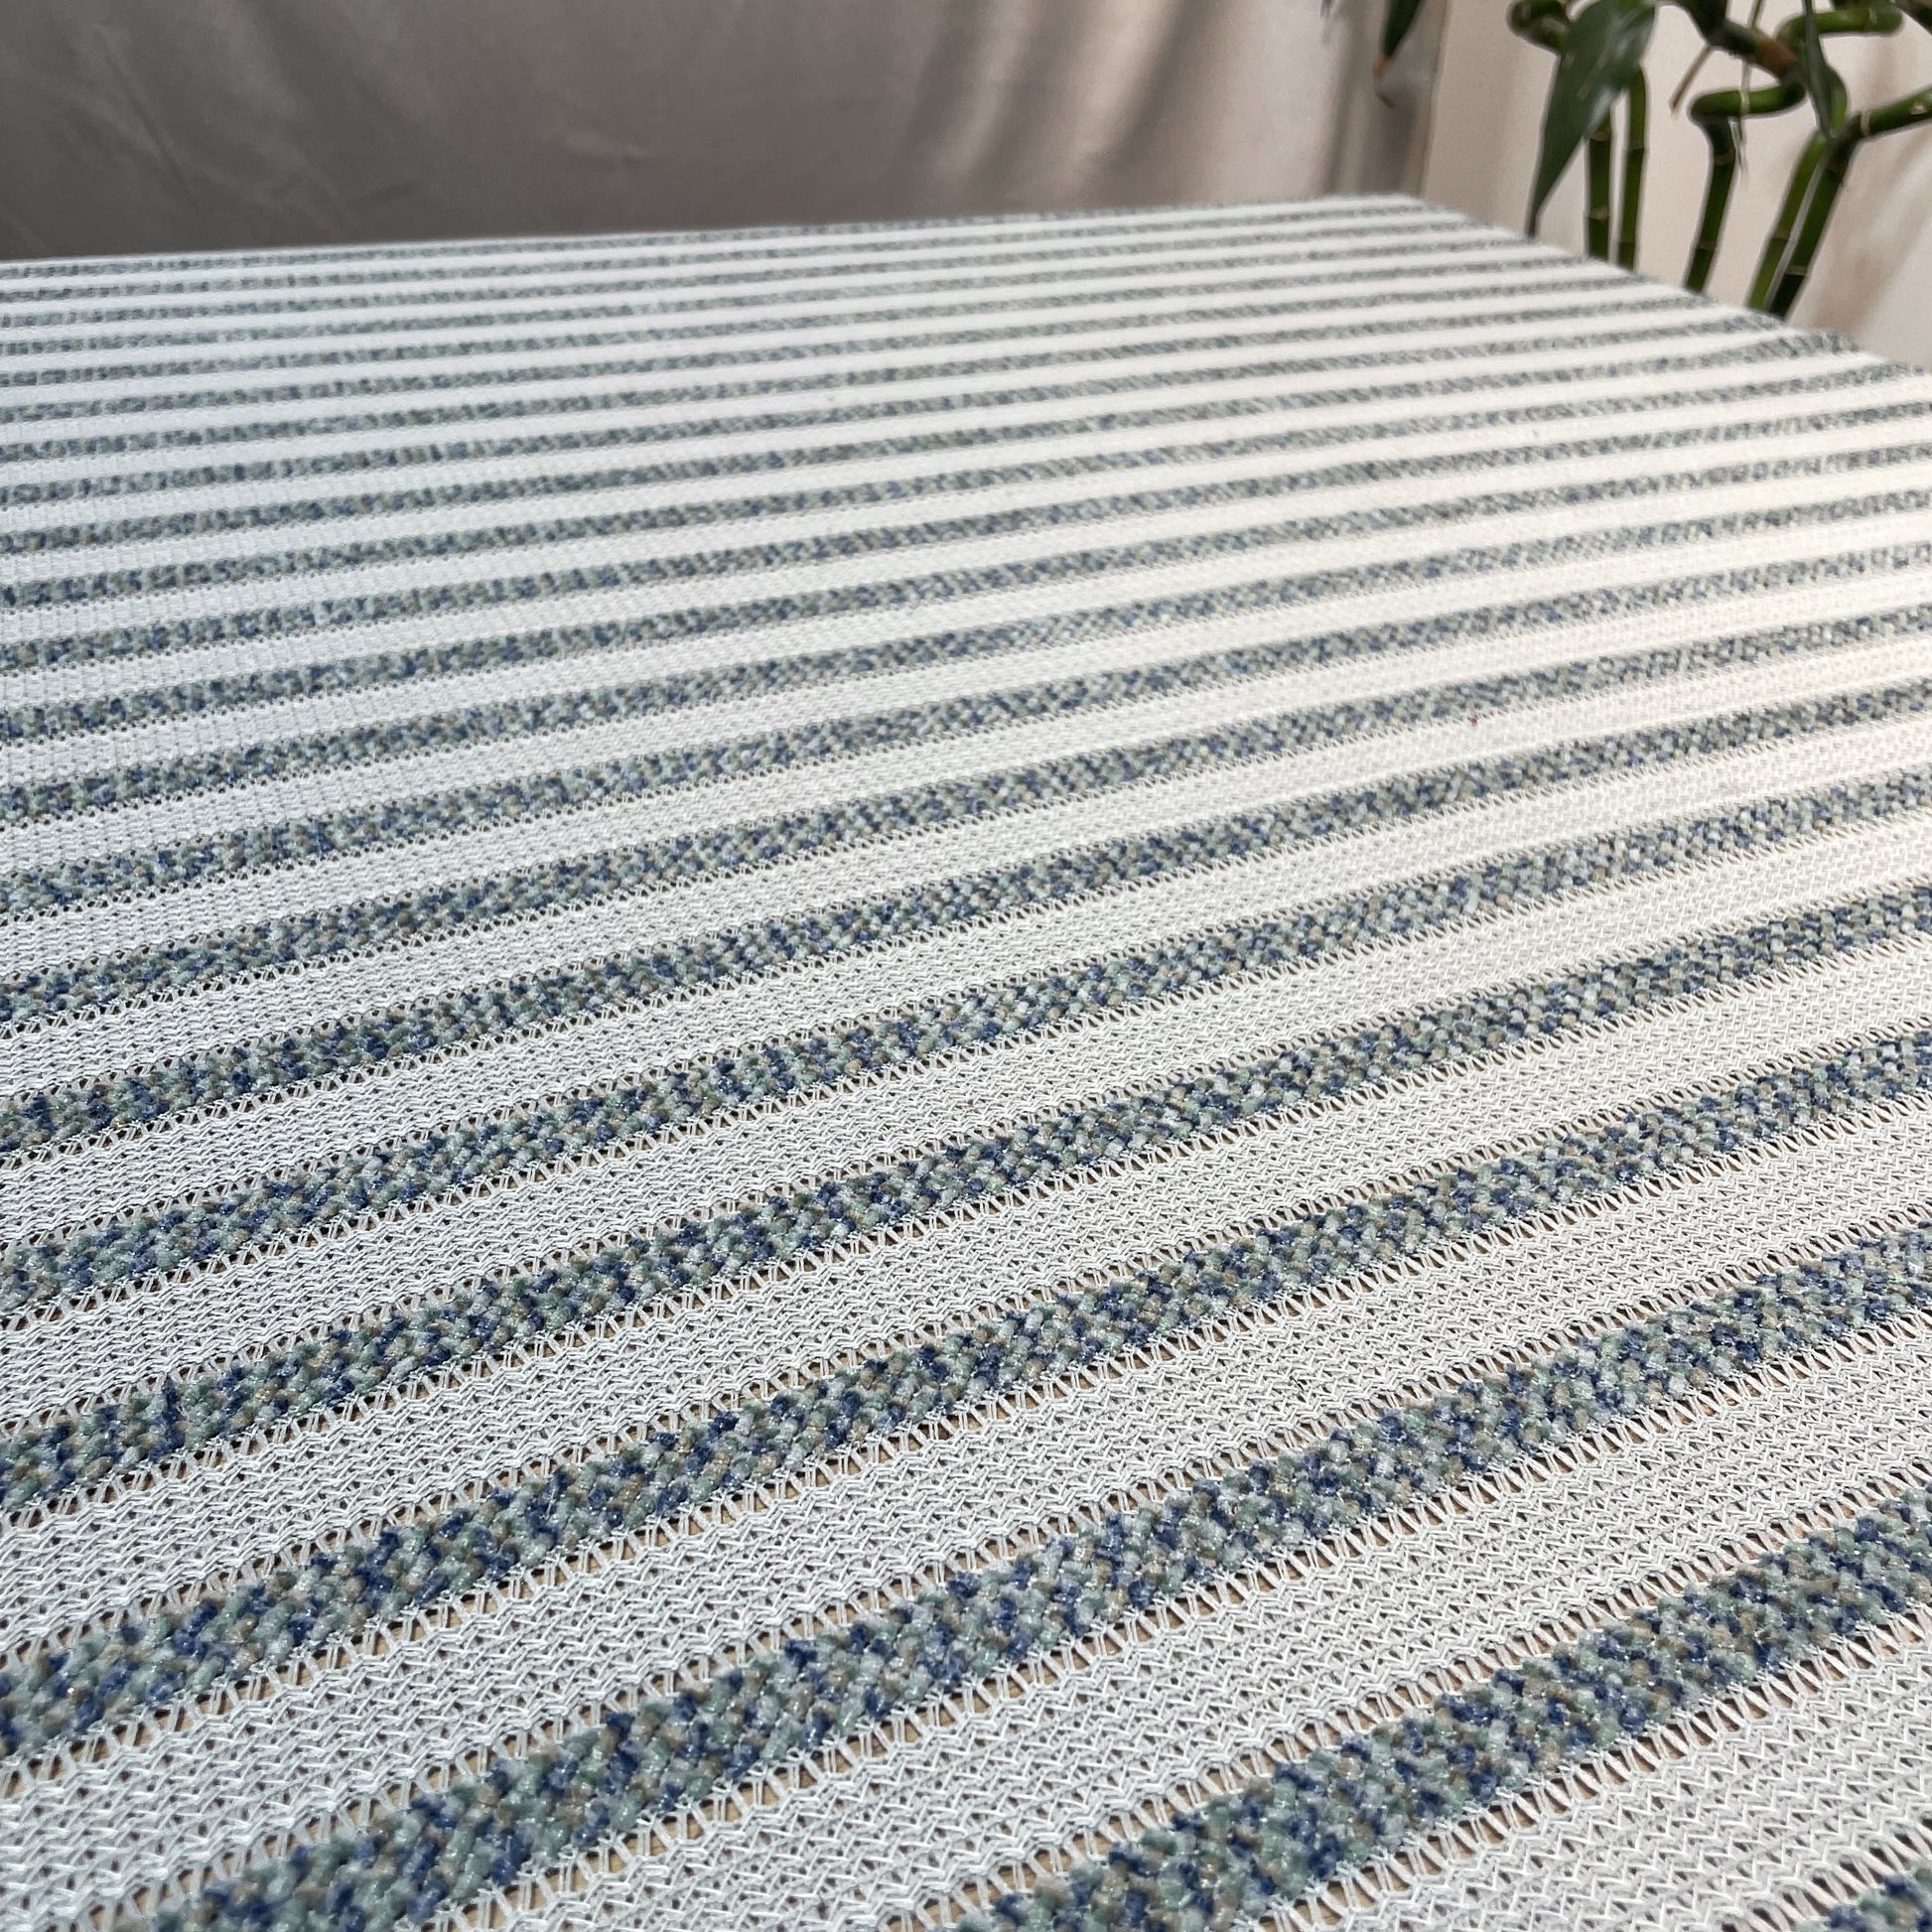 Premium Grey Stripes Crochet Fabric